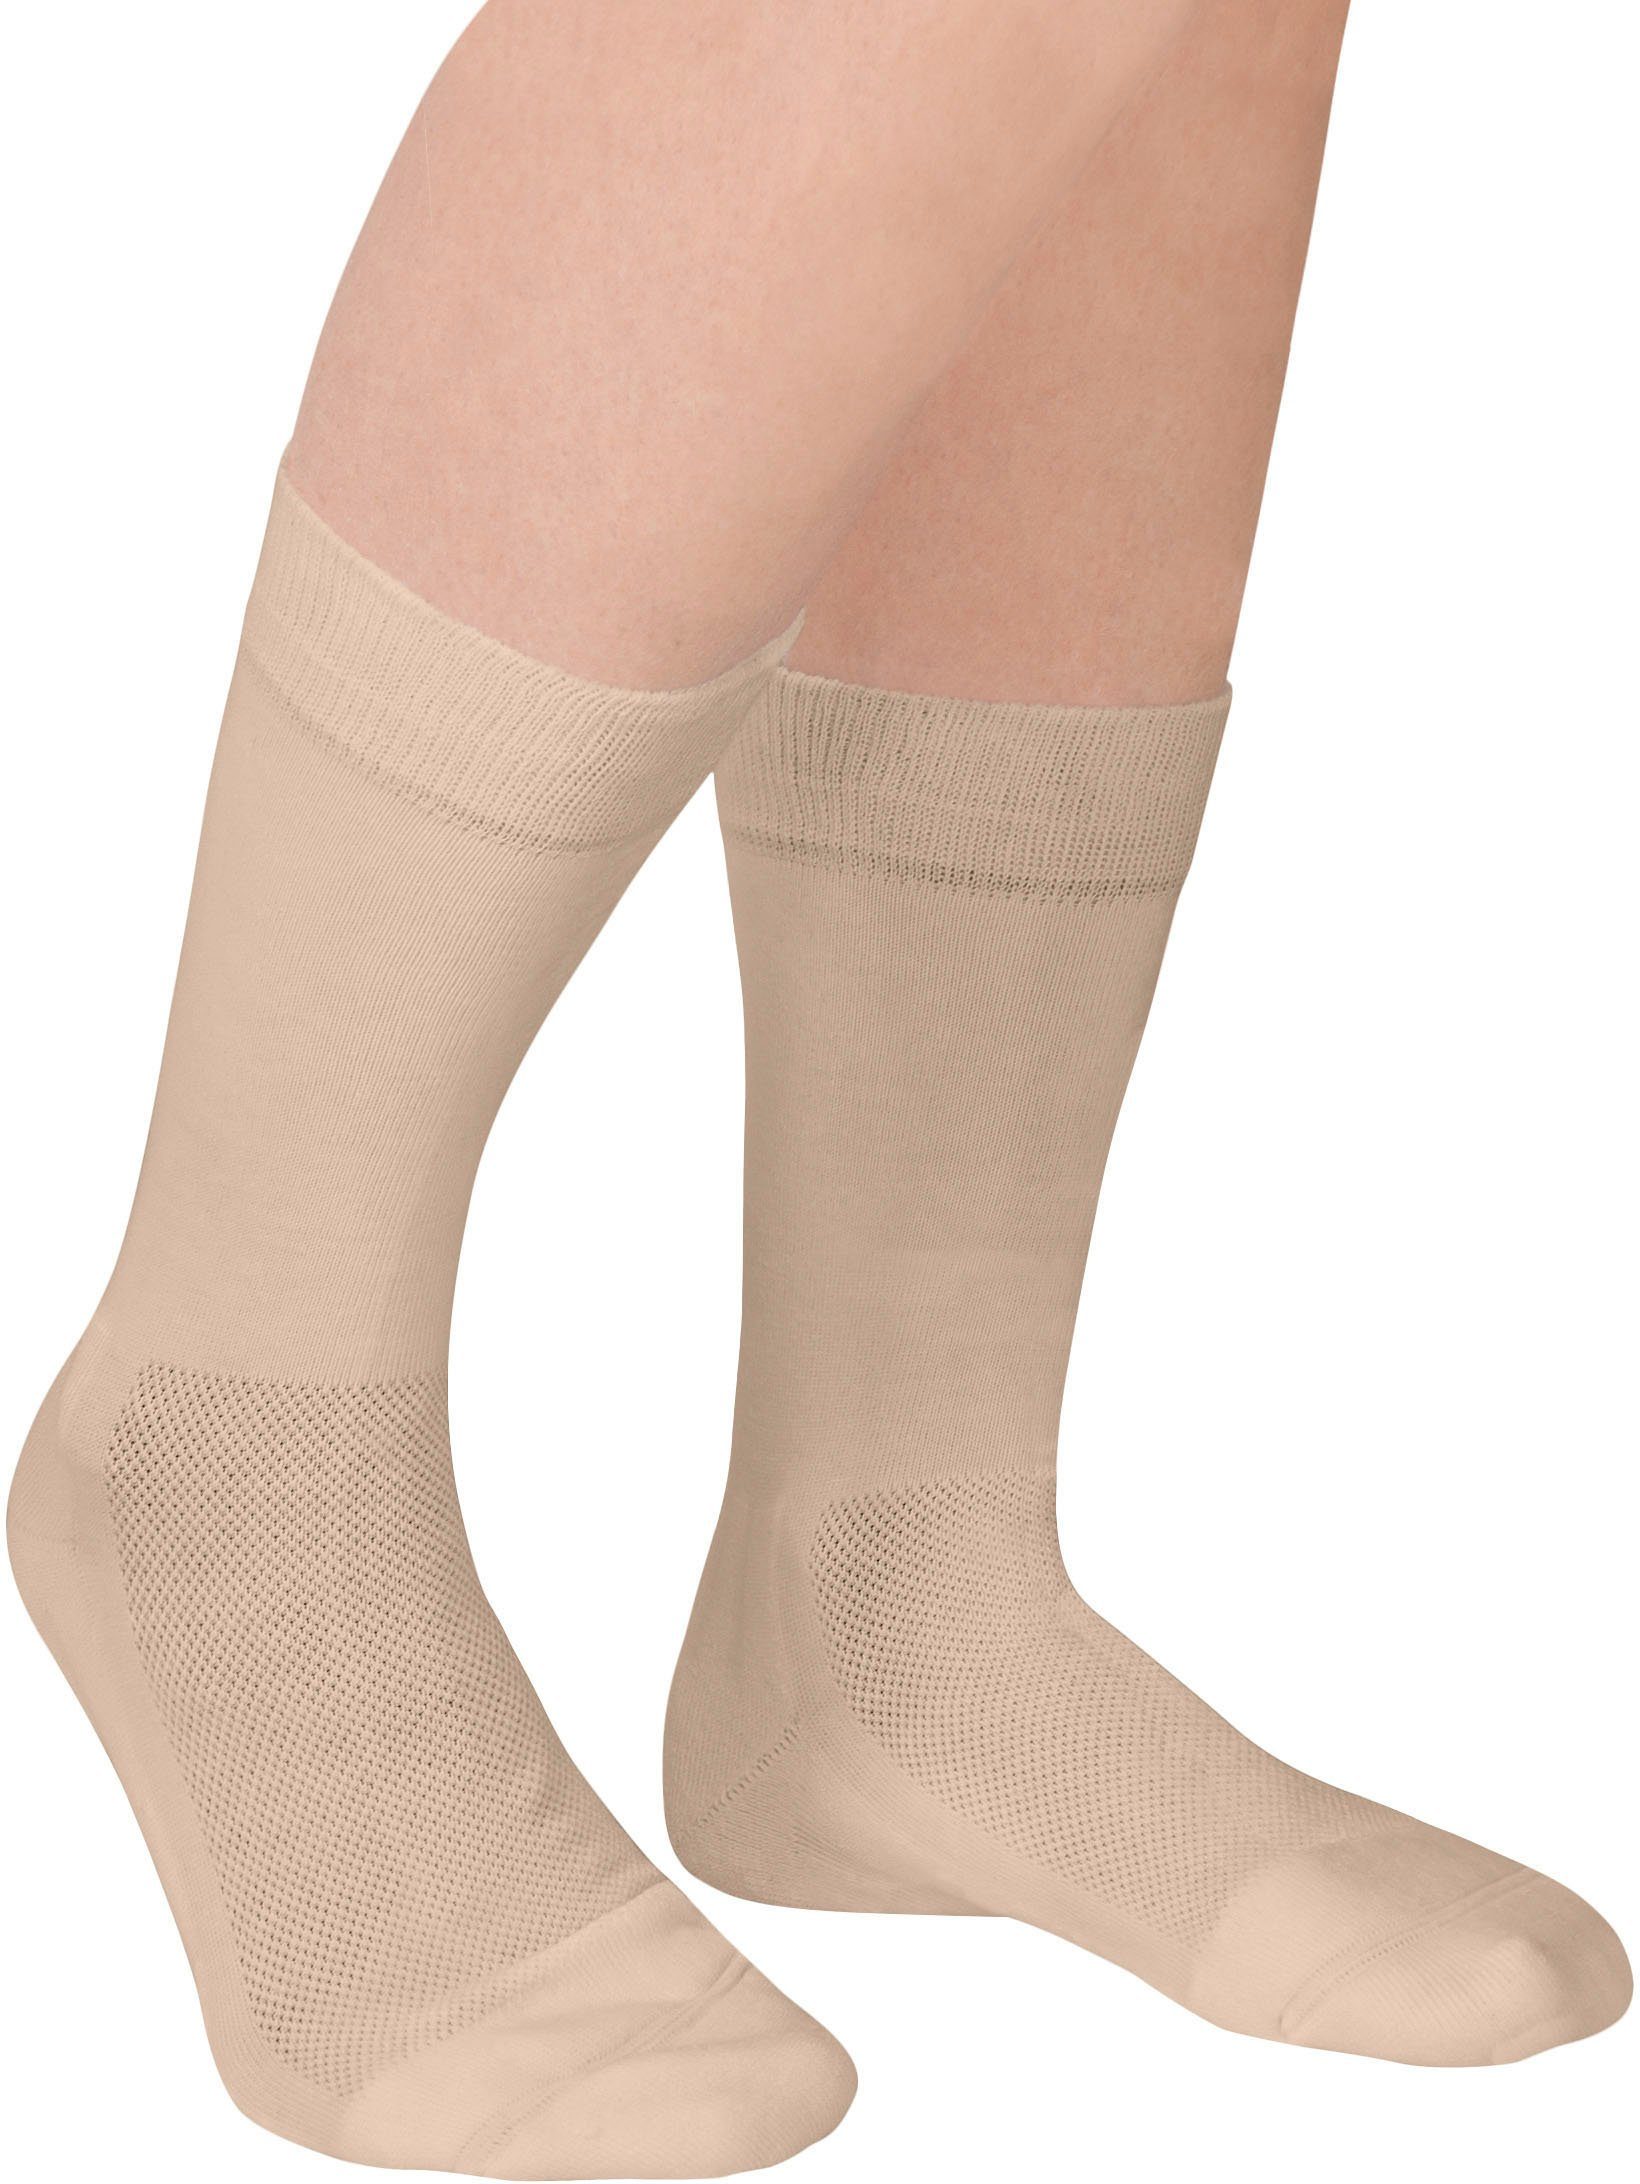 Diabetikersocken Venenfeund Sensitiv Socken (2-Paar) beige Fußgut